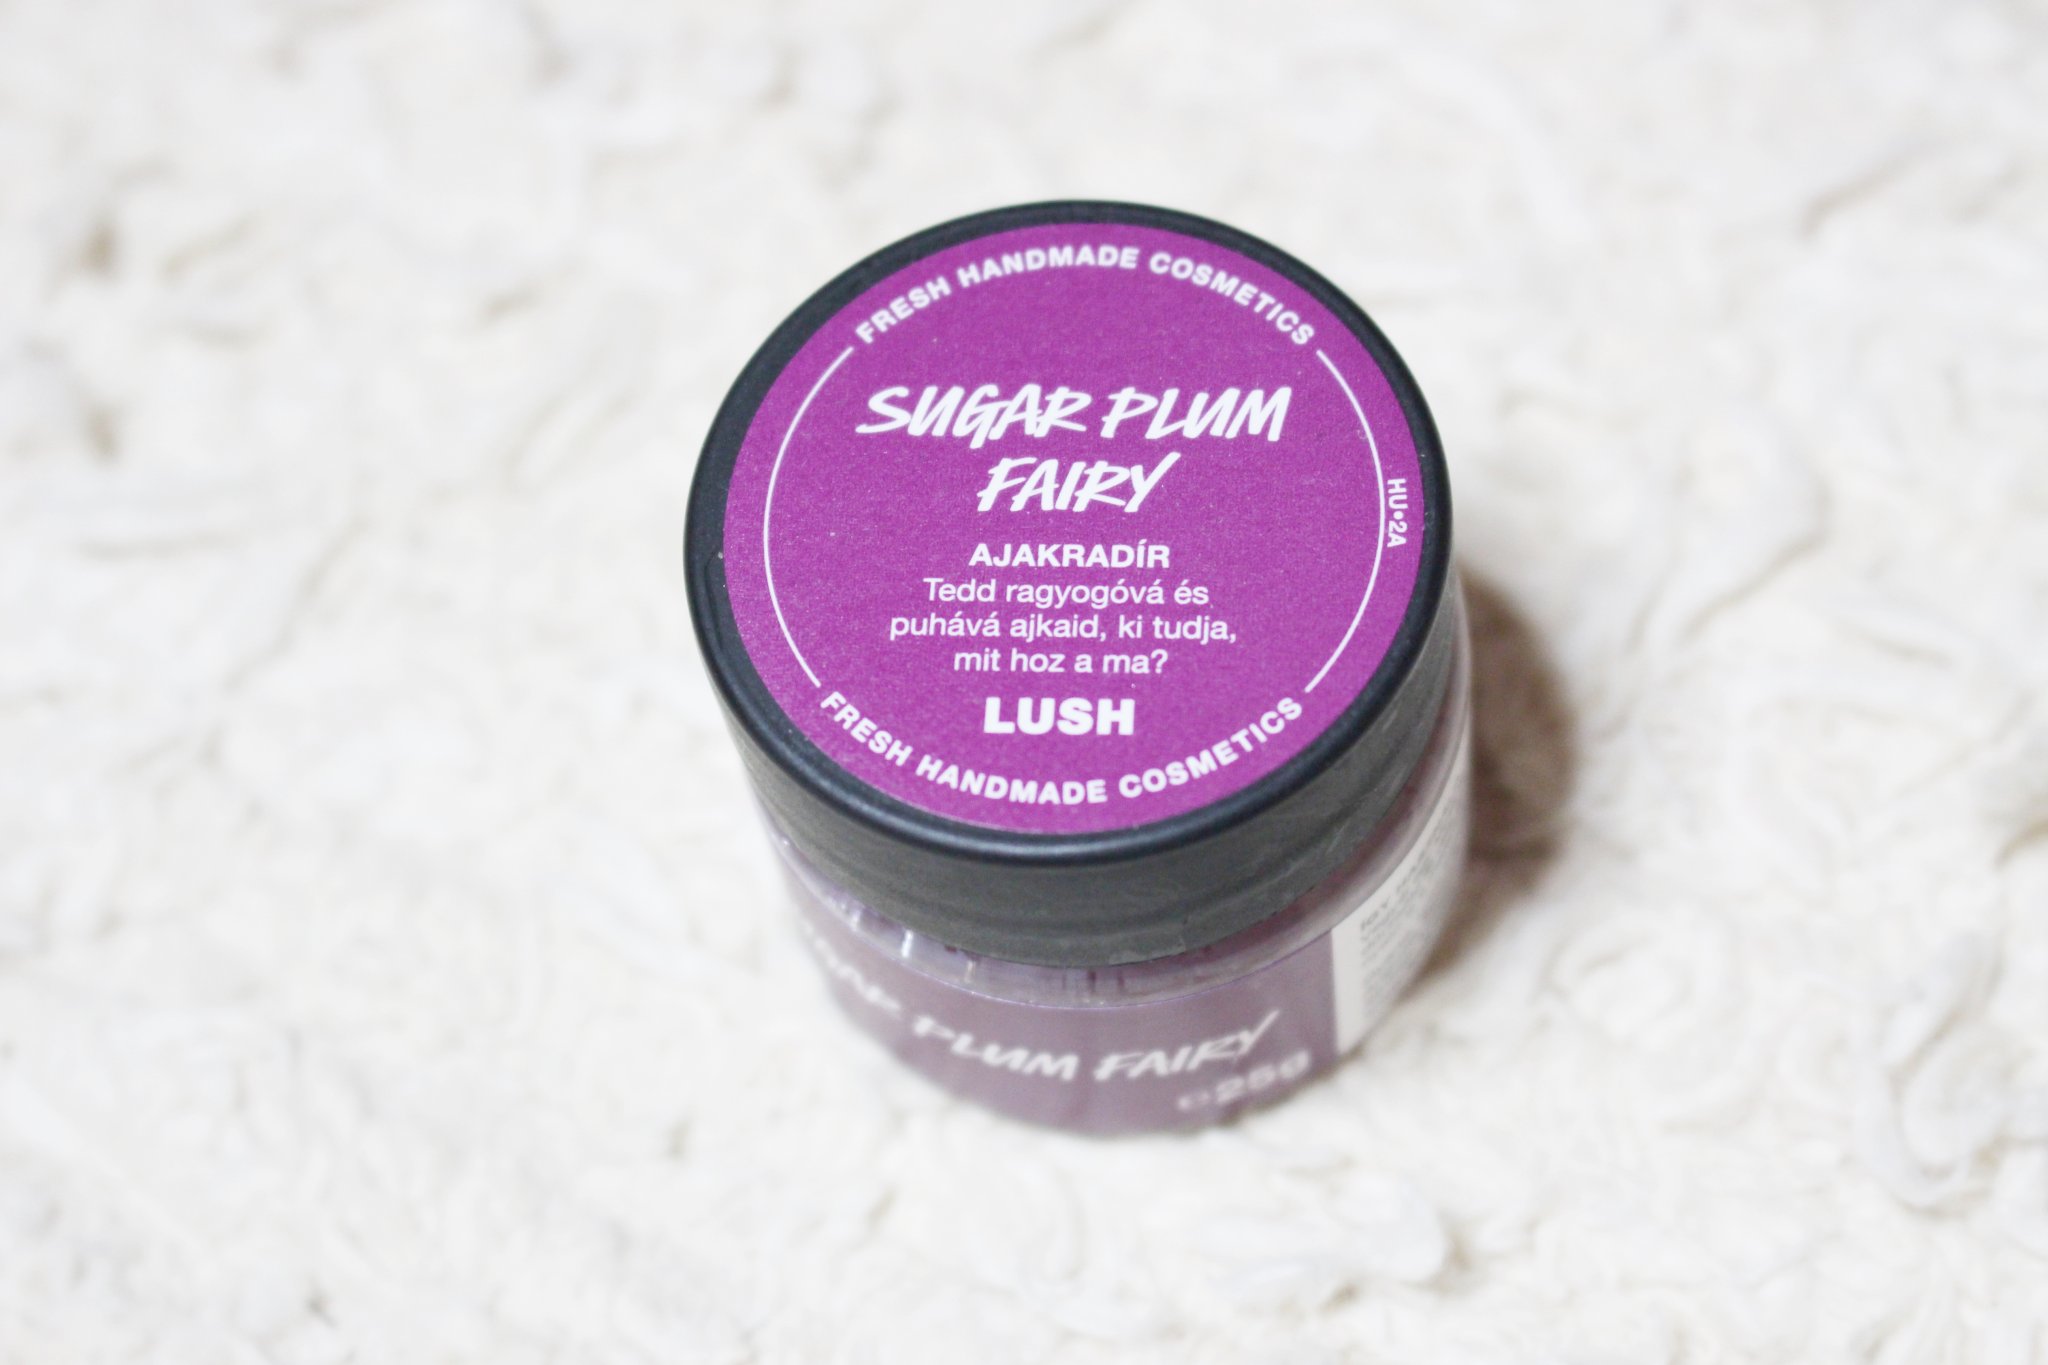 Teszt | LUSH Sugar plum fairy ajakradír